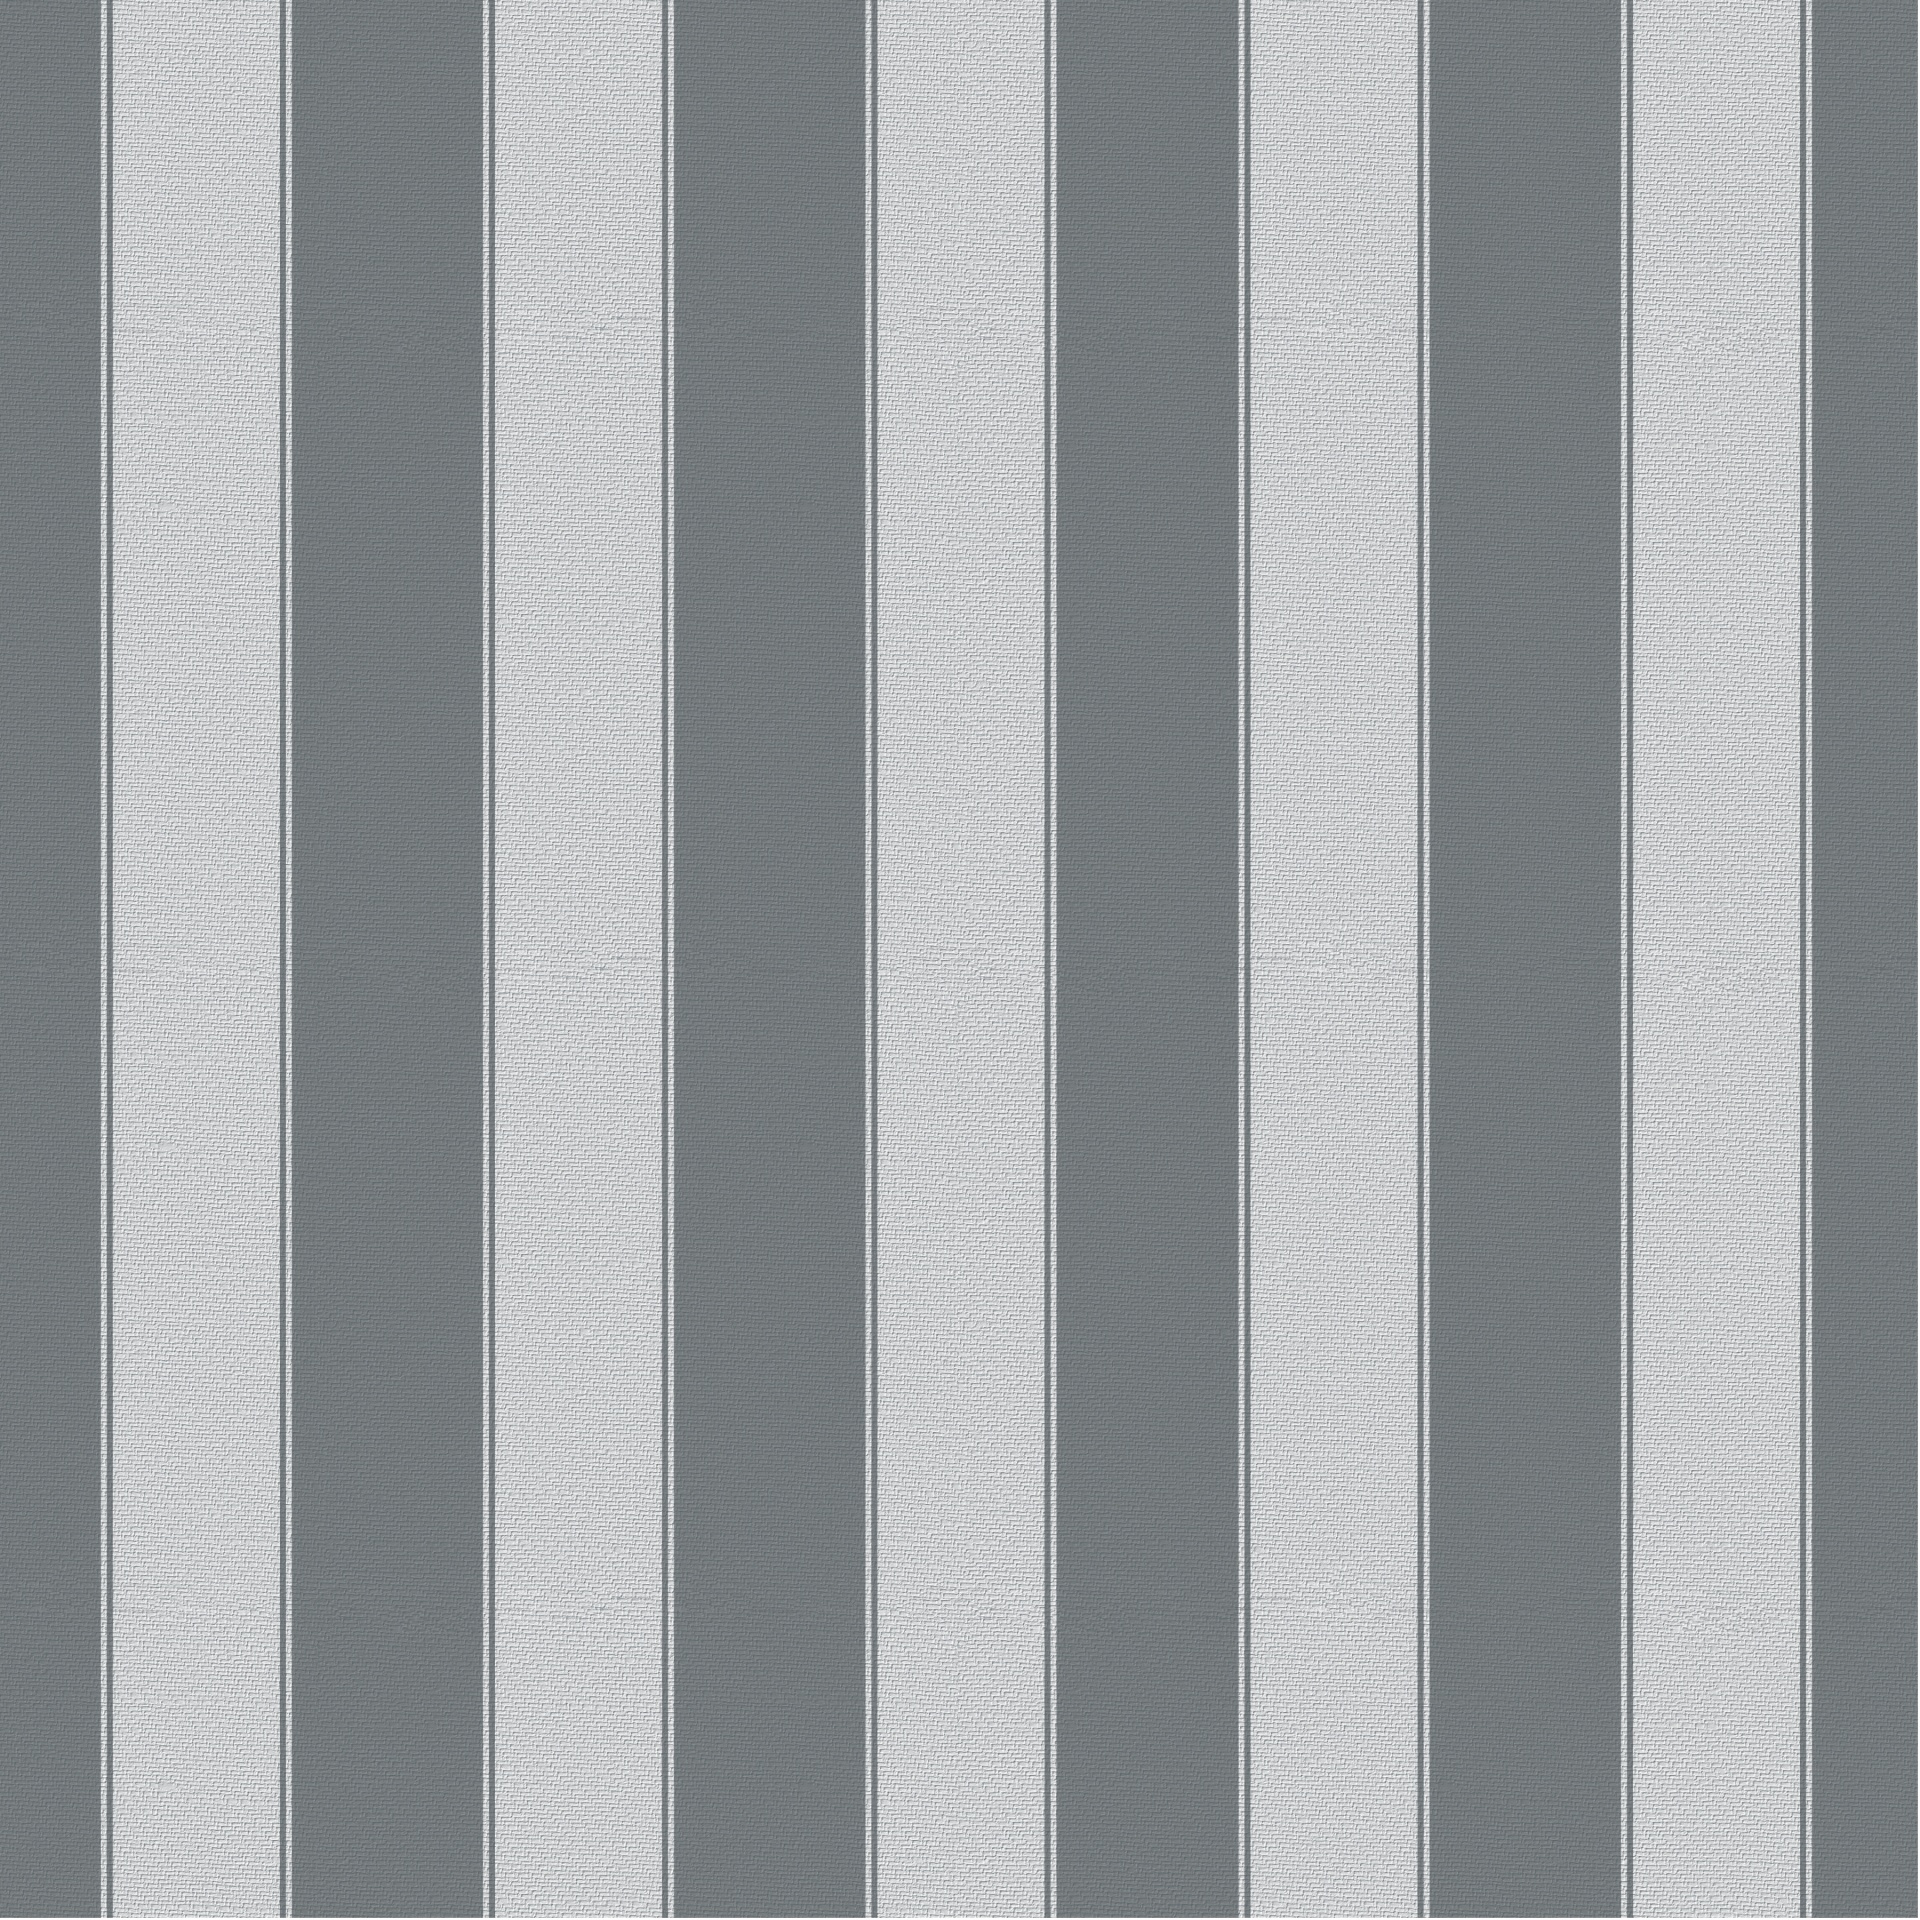 https://storage.needpix.com/rsynced_images/stripes-background-grey-texture.jpg